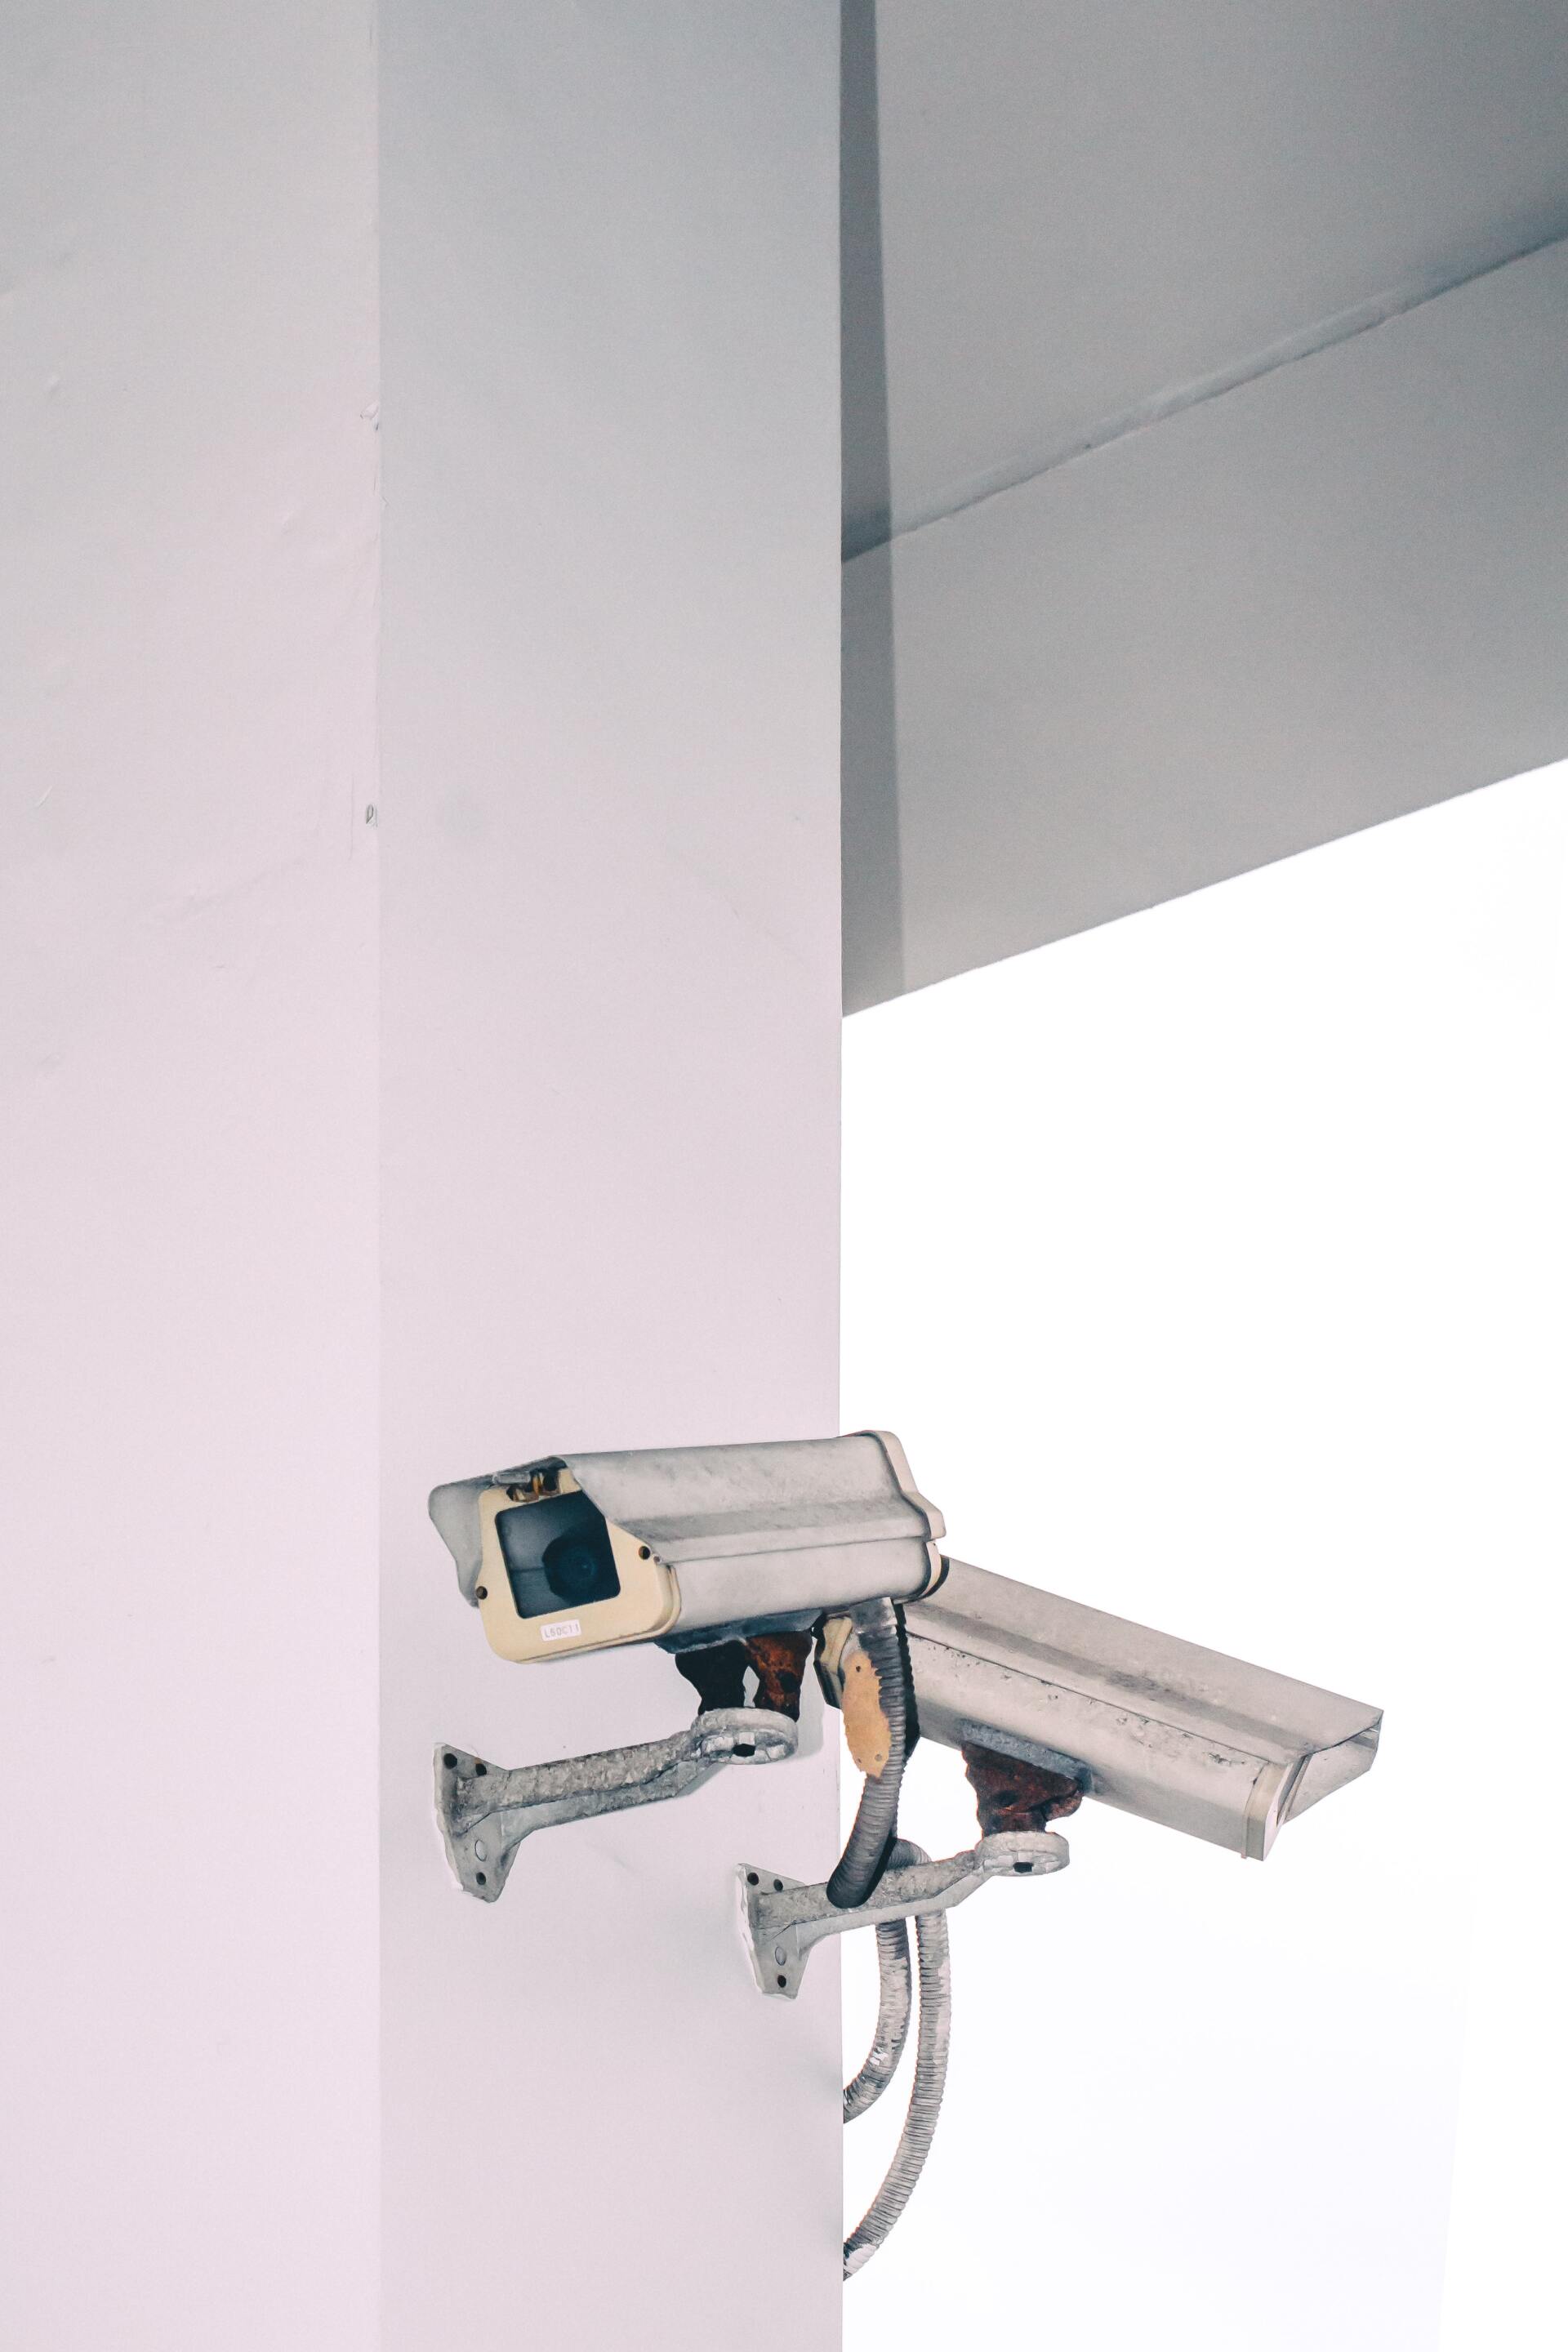 security cameras security camera system home security cameras wireless cameras wifi cameras small business security